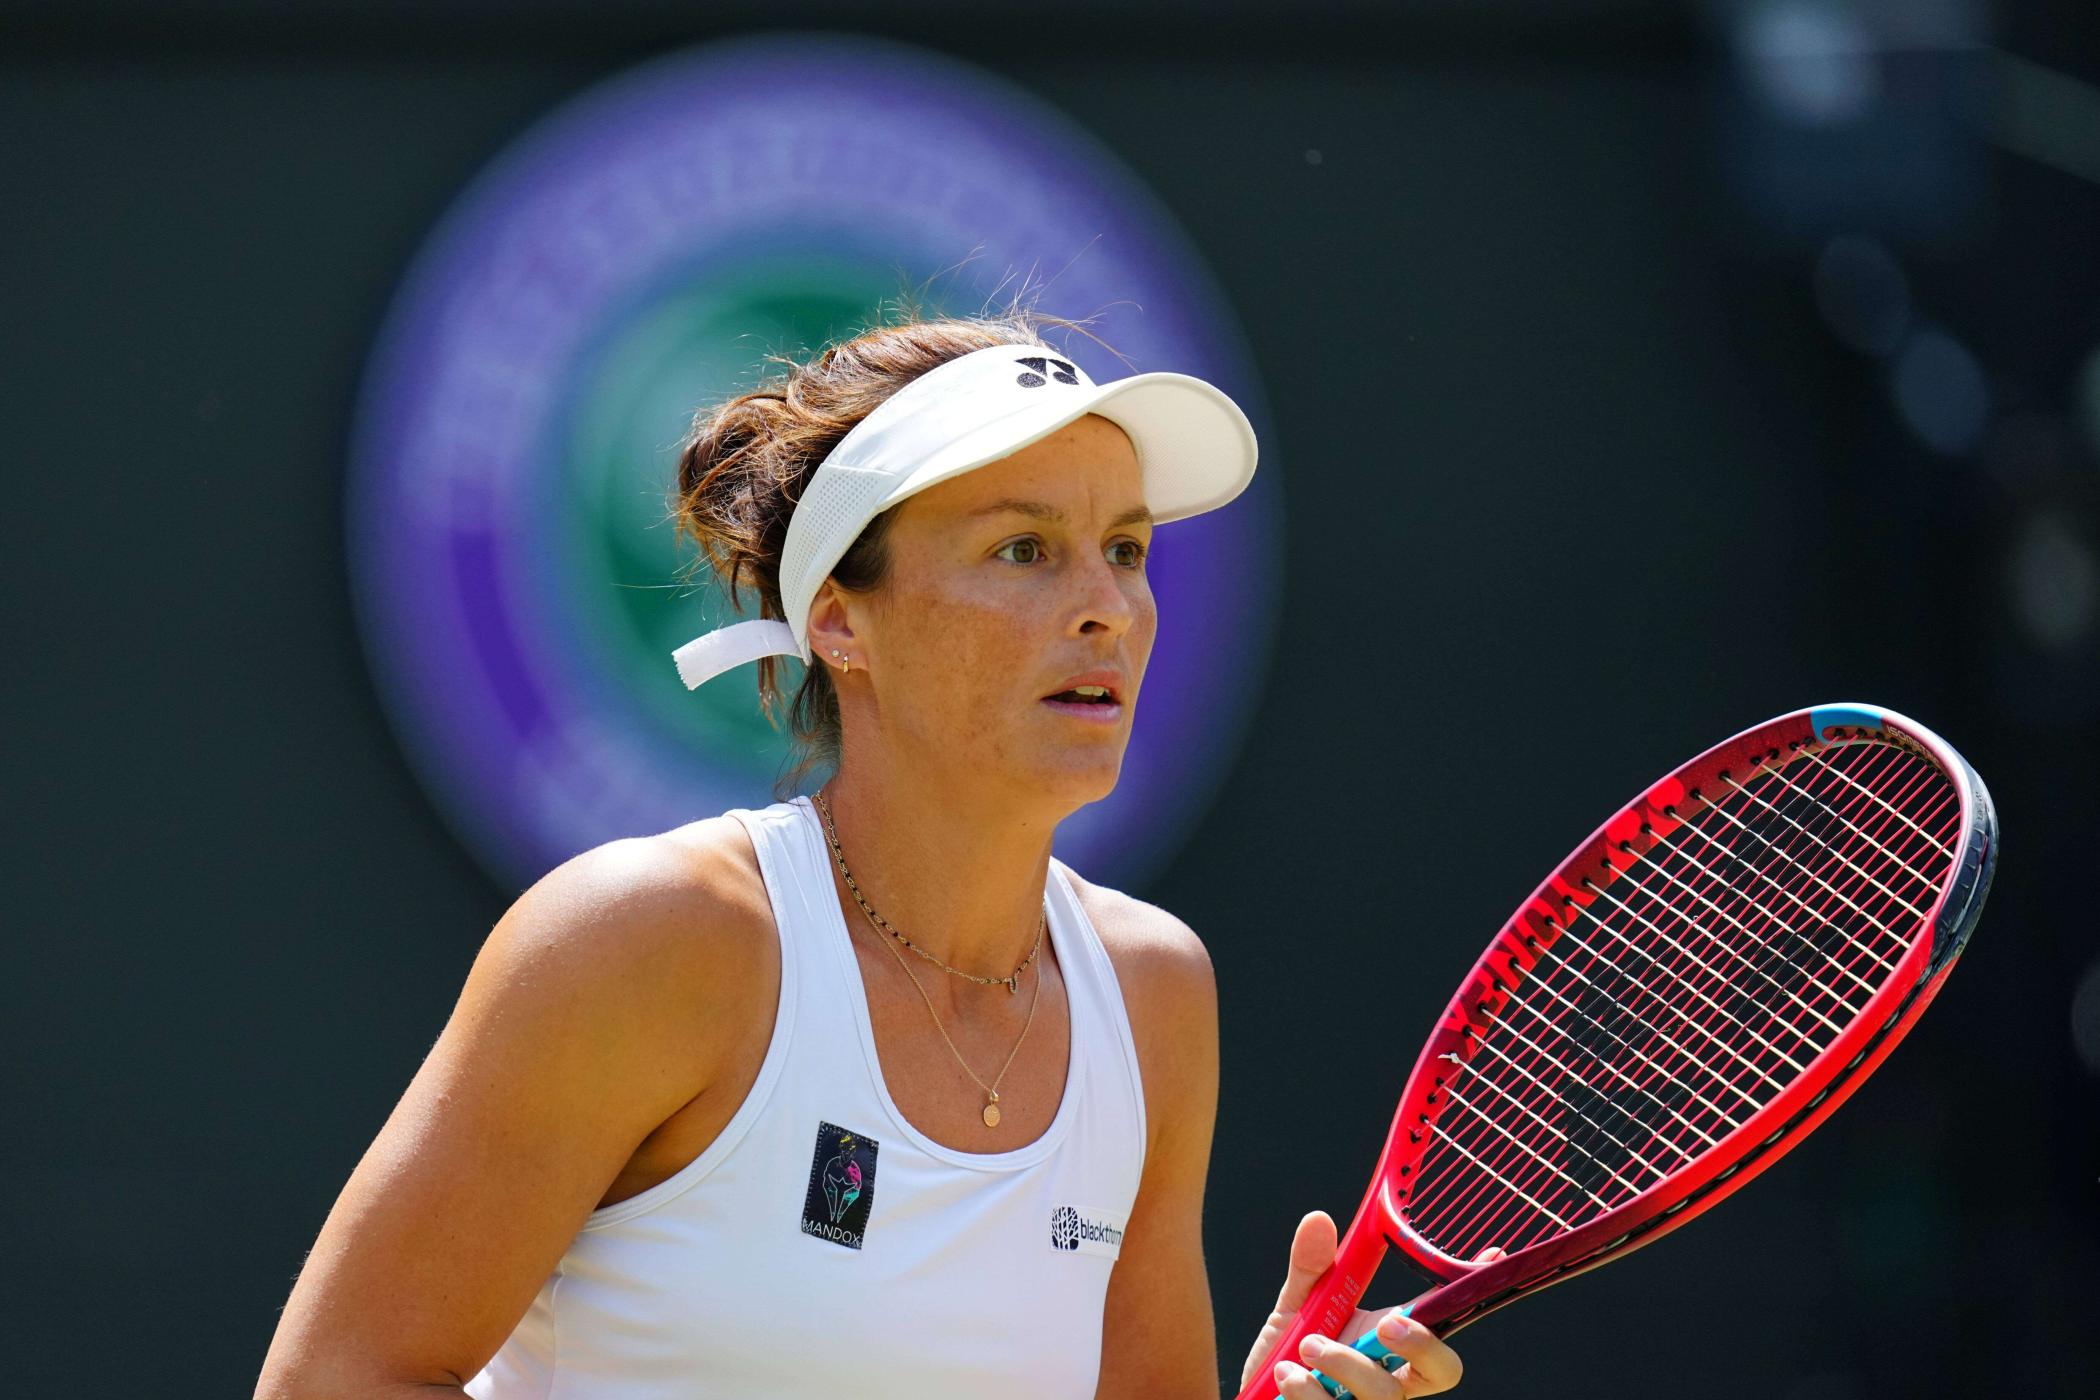 Wimbledon-Finaltraum geplatzt! Tatjana Maria geht die Luft gegen Ons Jabeur aus Sports Illustrated